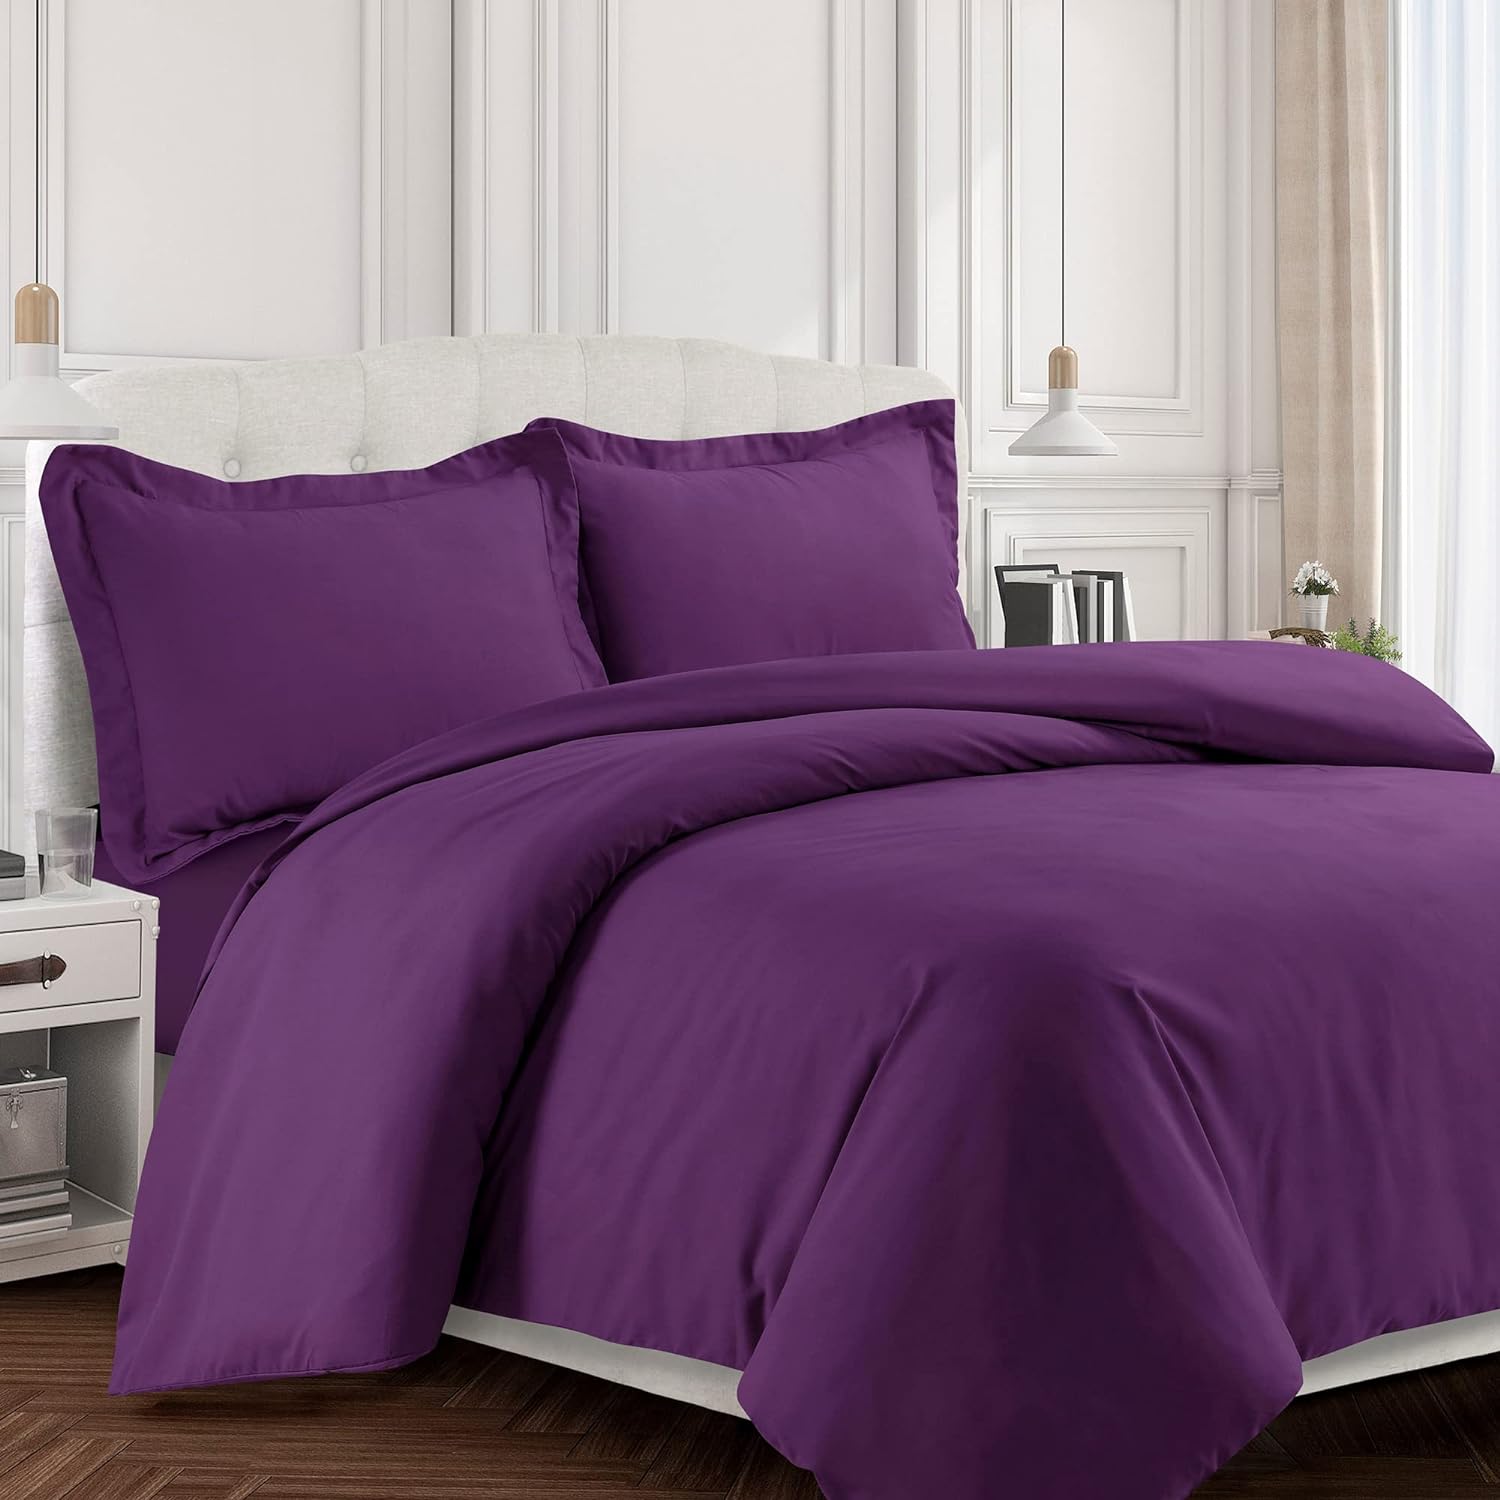 Tribeca Living Twin Duvet Cover Set, Soft Plain Bed Set Wrinkle Resistant Bedding, Microfiber, Includes One Duvet Cover and Sham Pillowcase, Durable Bedding 110 GSM, Valencia/Dark Purple